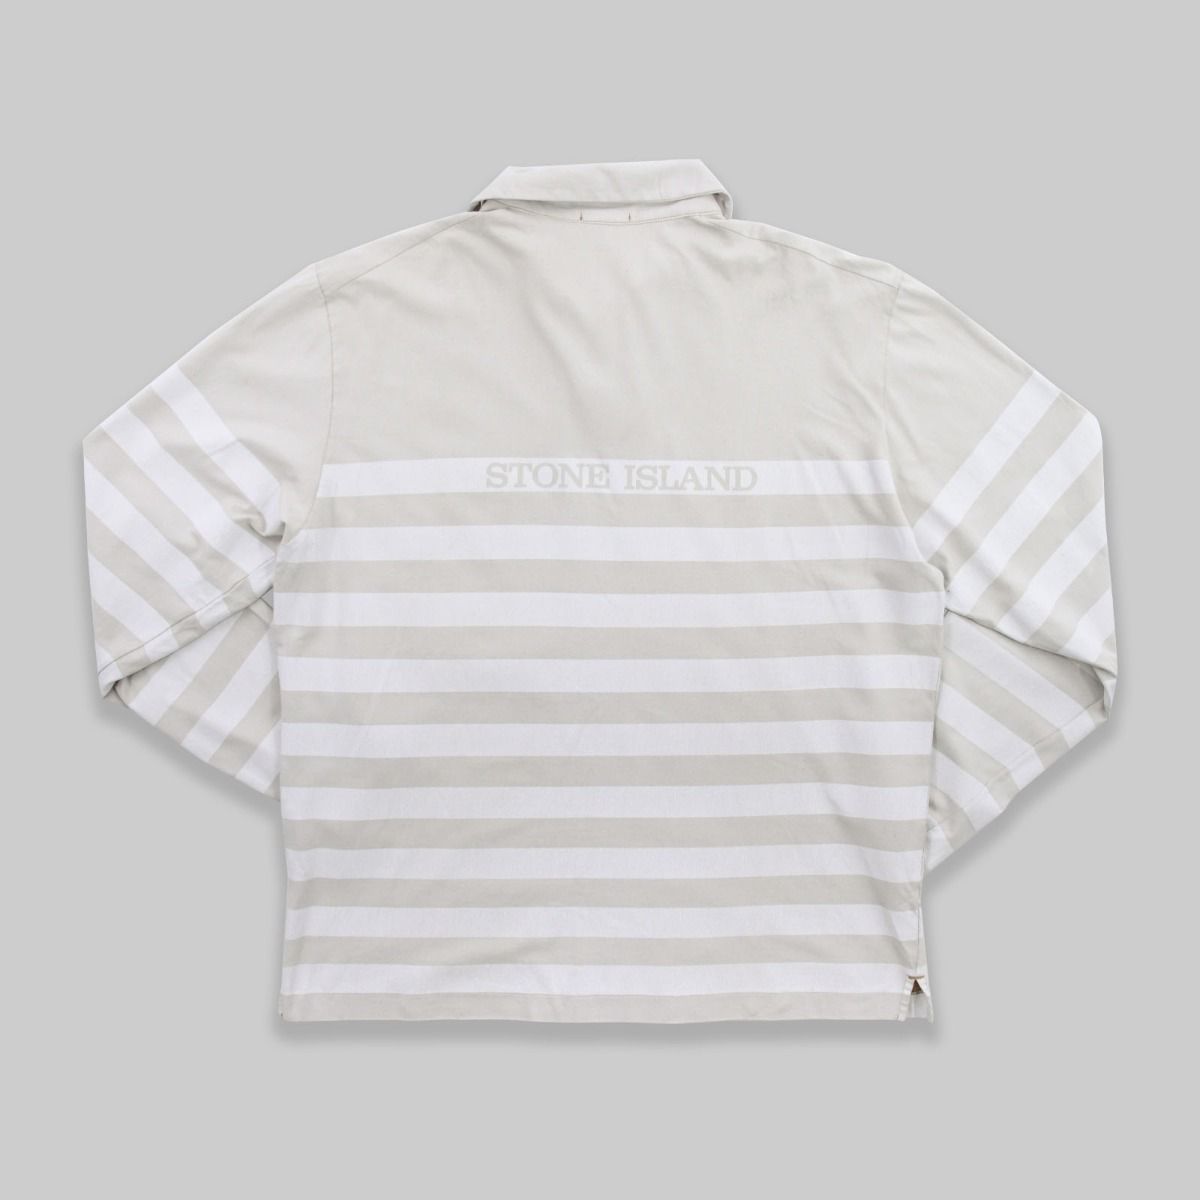 Stone Island S/S 2002 Long Sleeve Polo Shirt